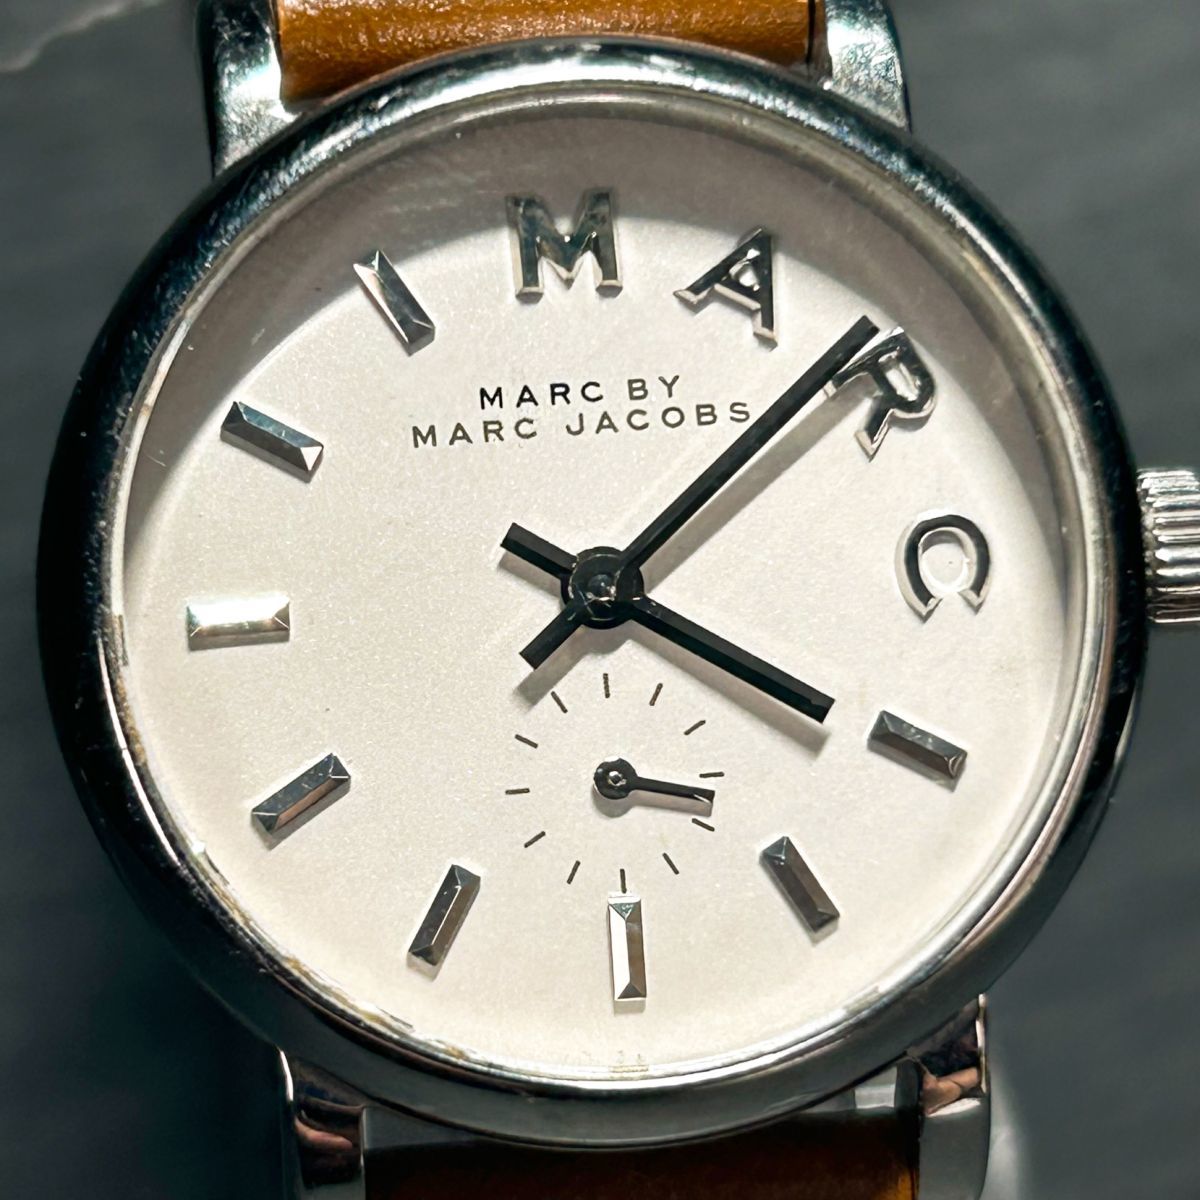 MARC BY MARC JACOBS マークバイマークジェイコブス 腕時計 クオーツ アナログ スモールセコンド レザーベルト 電池交換済み 動作確認済み_画像1